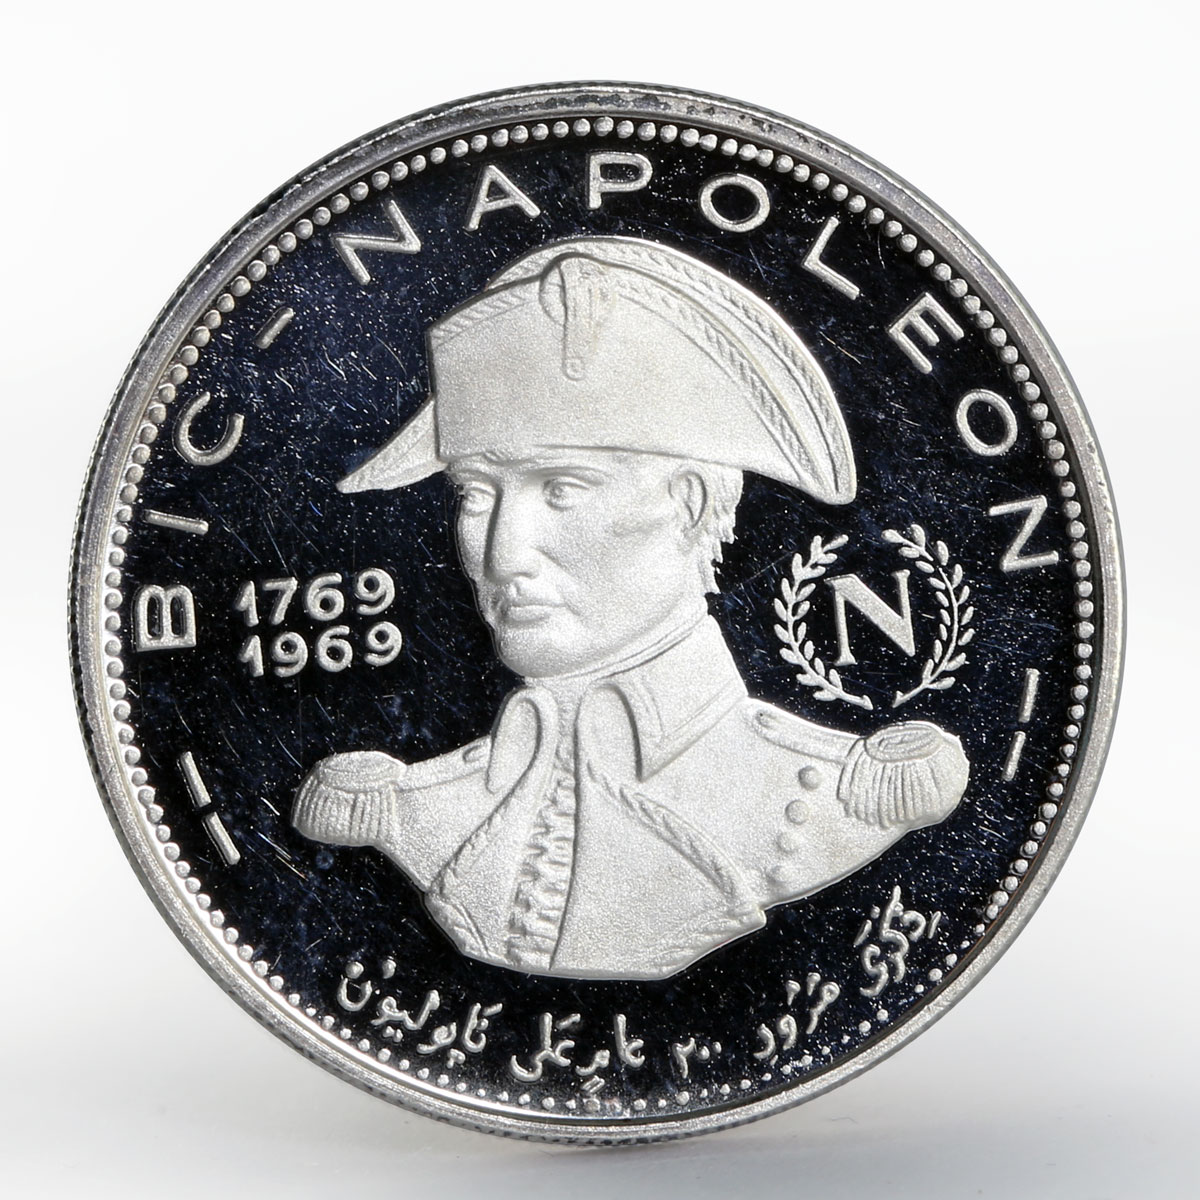 Sharjah 5 riyals 200th Anniversary of Napoleon Bonaparte silver proof coin 1970